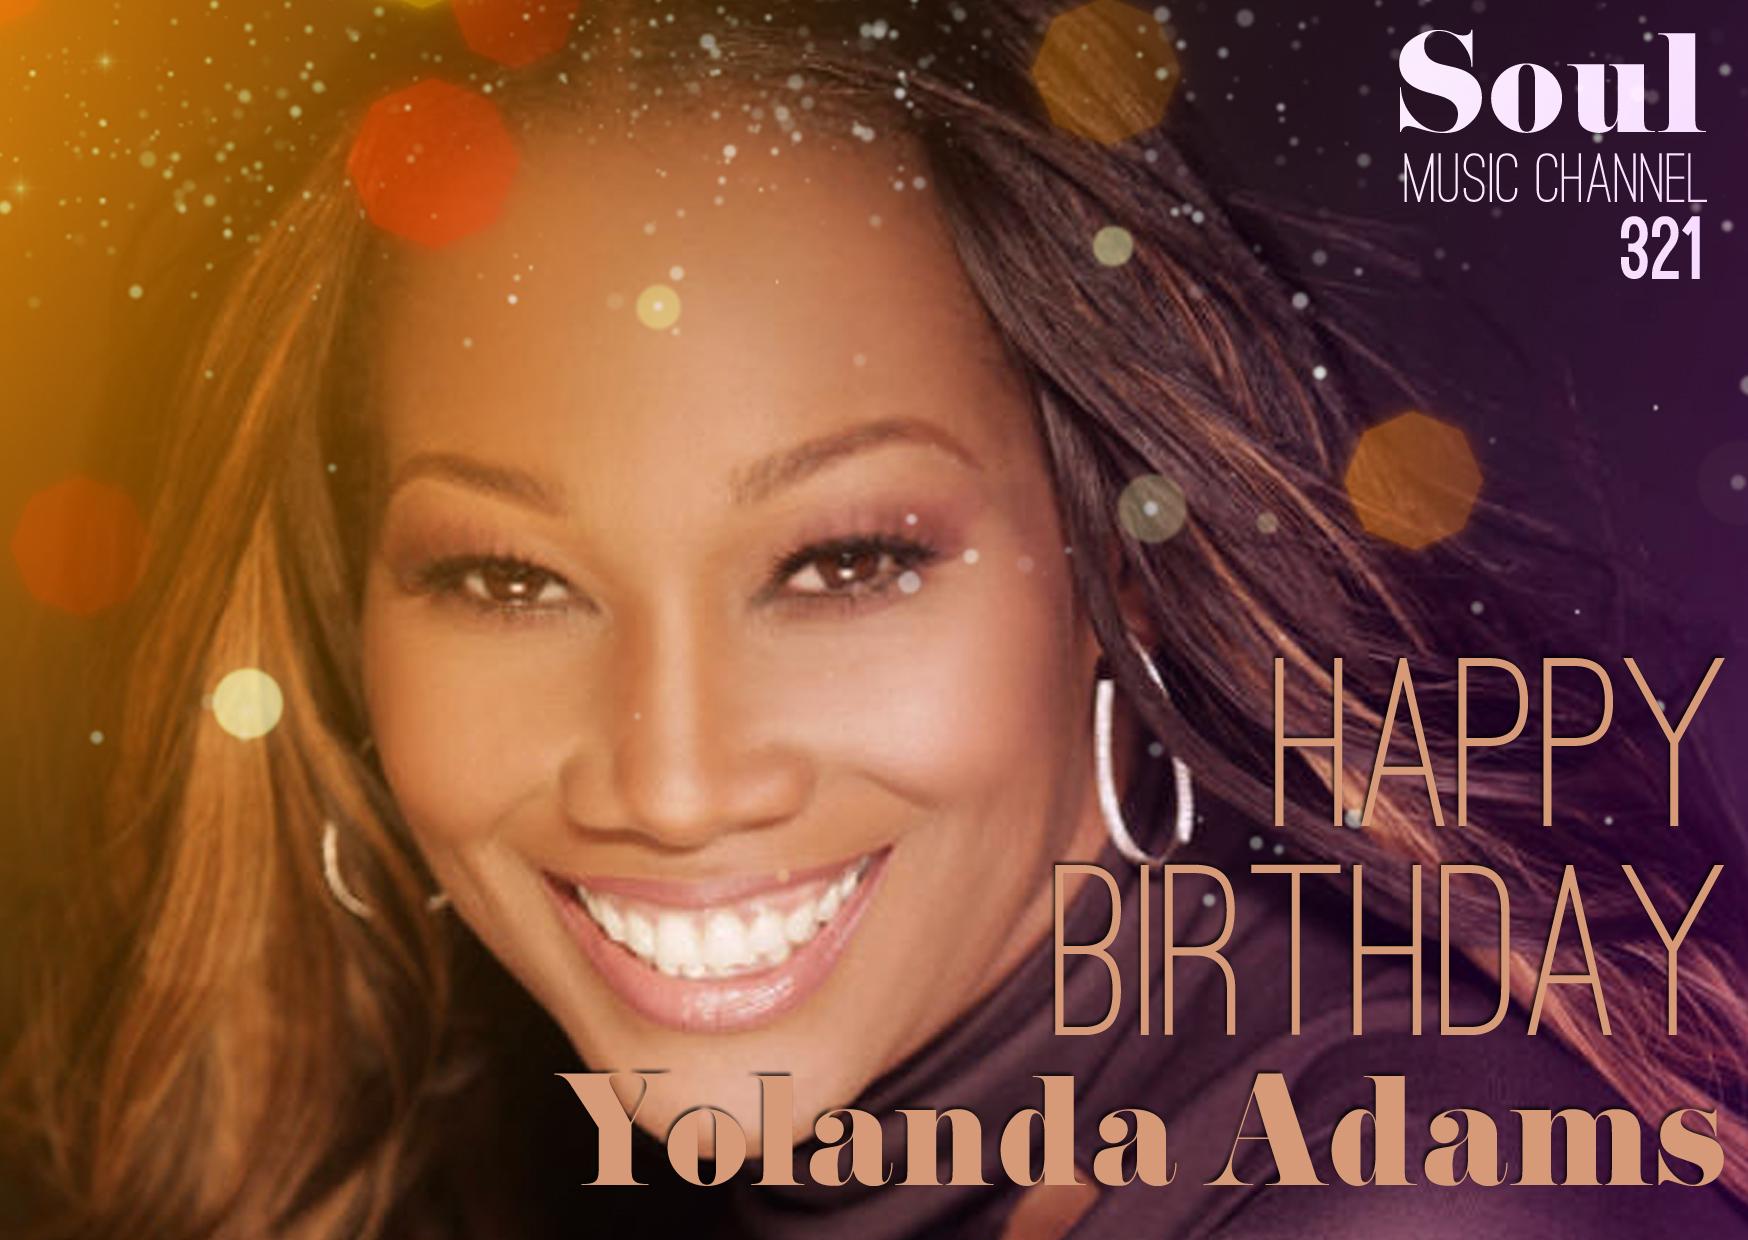 Happy Birthday to Gospel singer, radio host, producer, and actress Yolanda Adams  